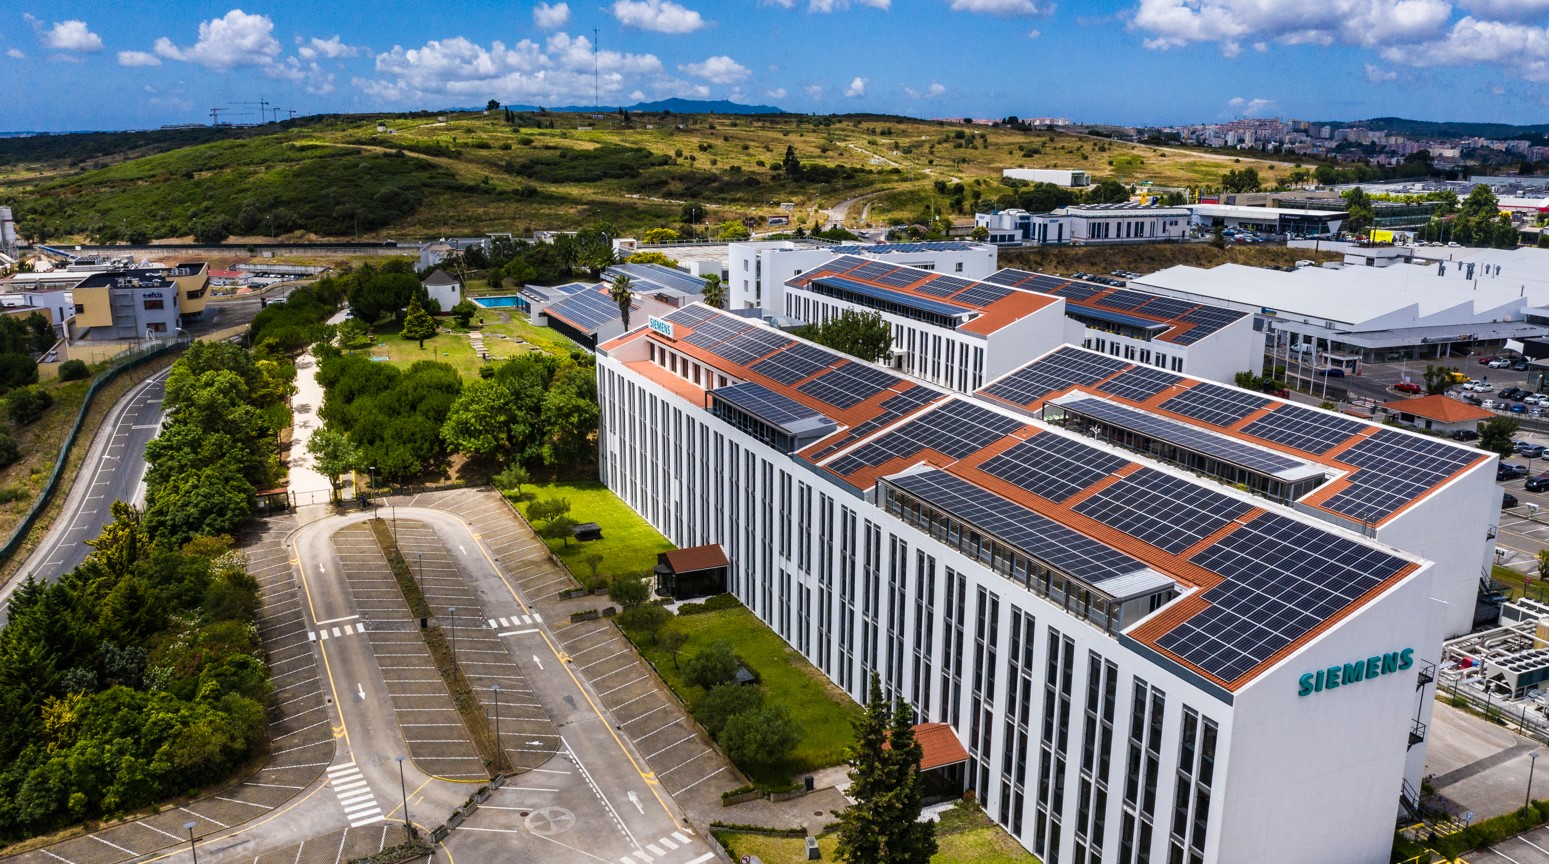 Siemens implementa “Sustainable & Smart Campus” em Alfragide